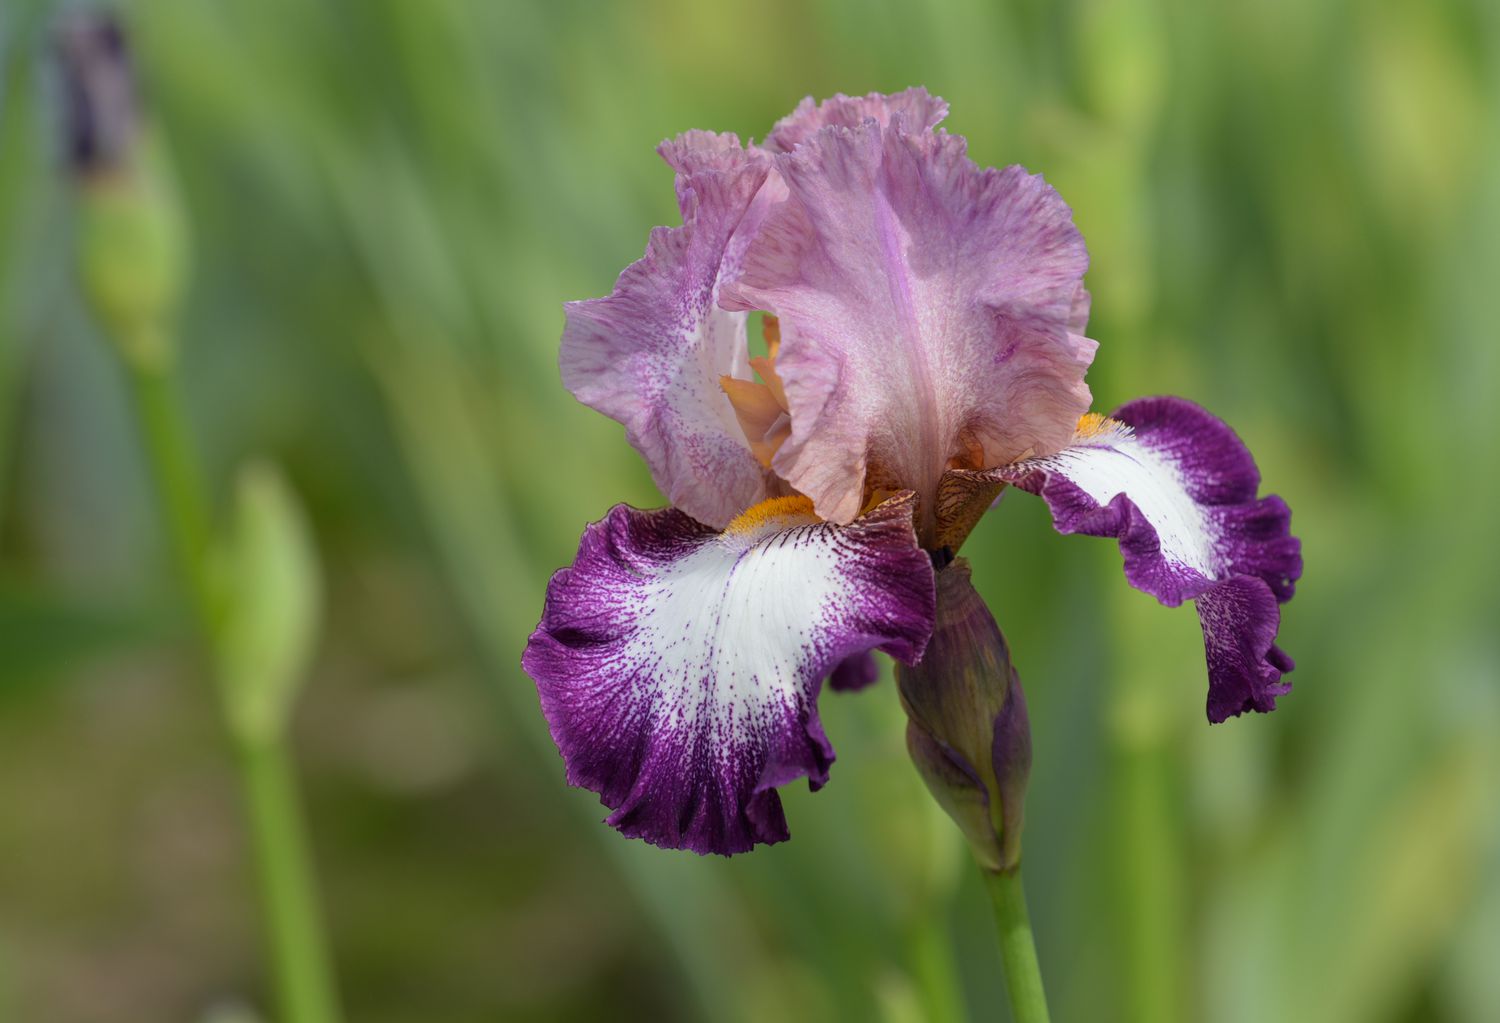 Wild Iris, The